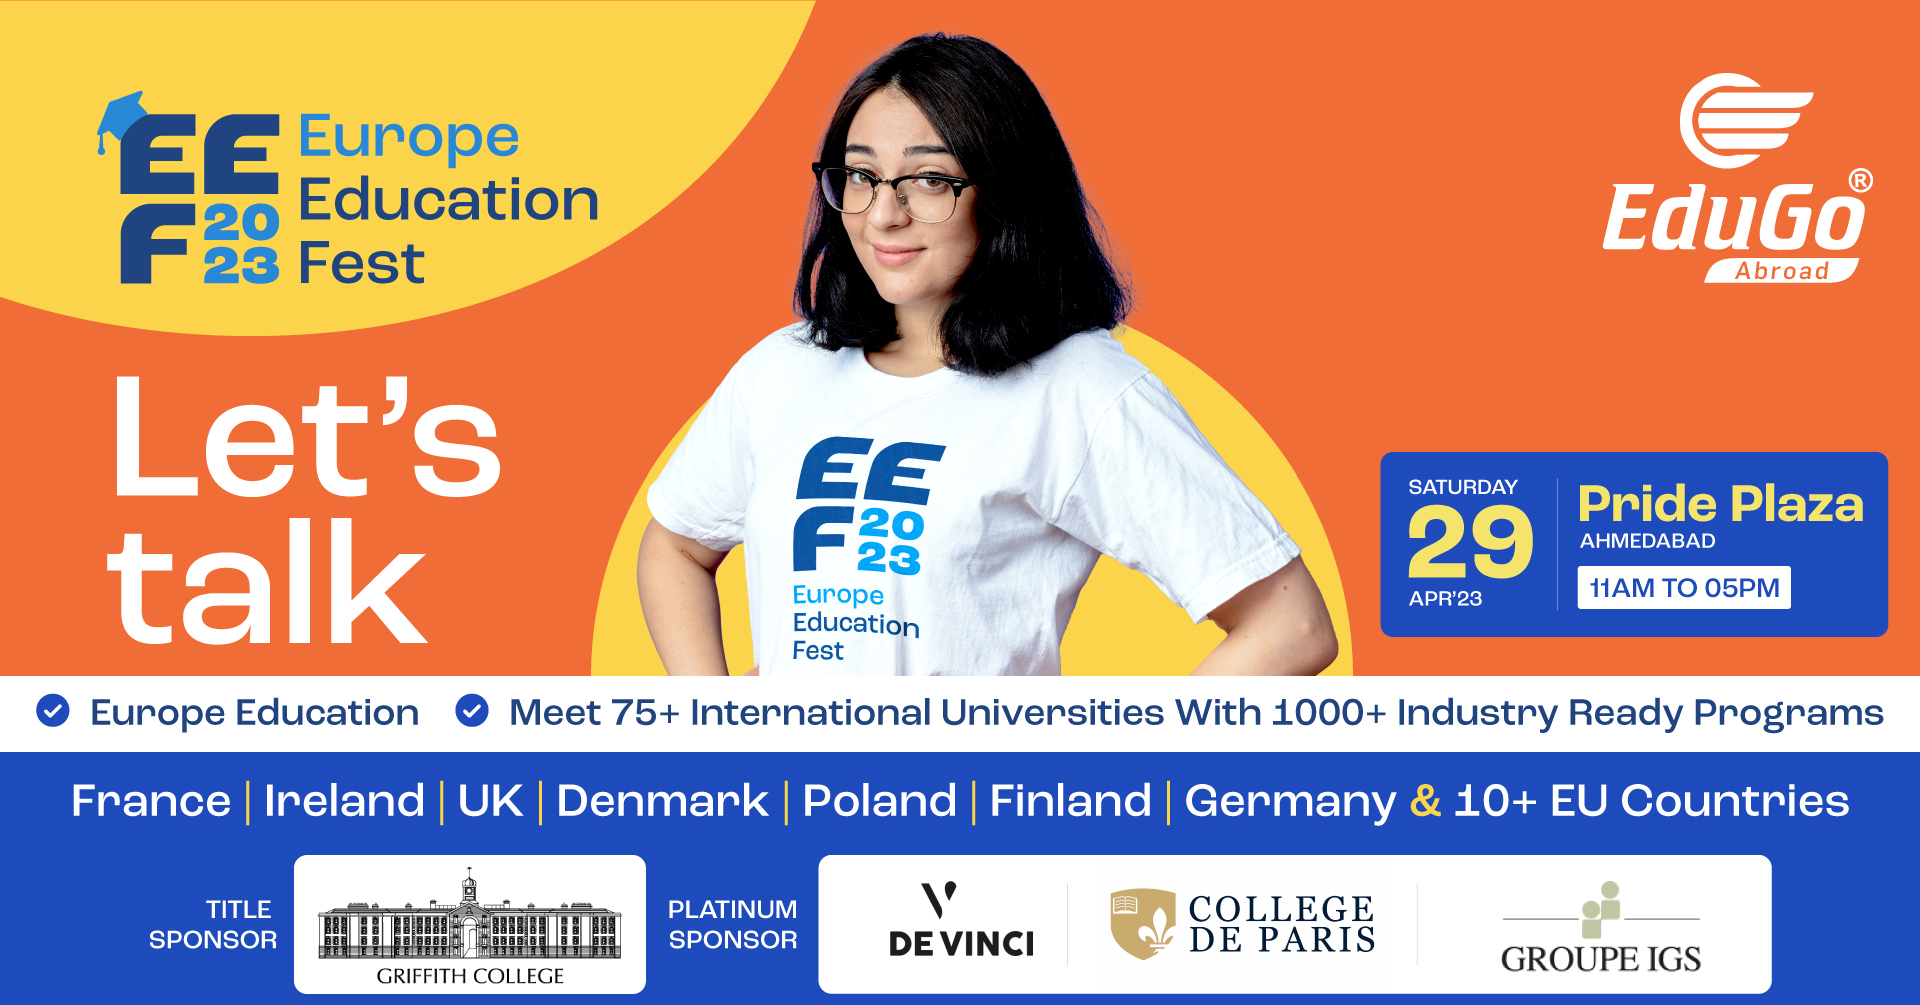 Europe Education Fest 2023 | Edugo Abroad (Ahmedabad), Ahmedabad, Gujarat, India